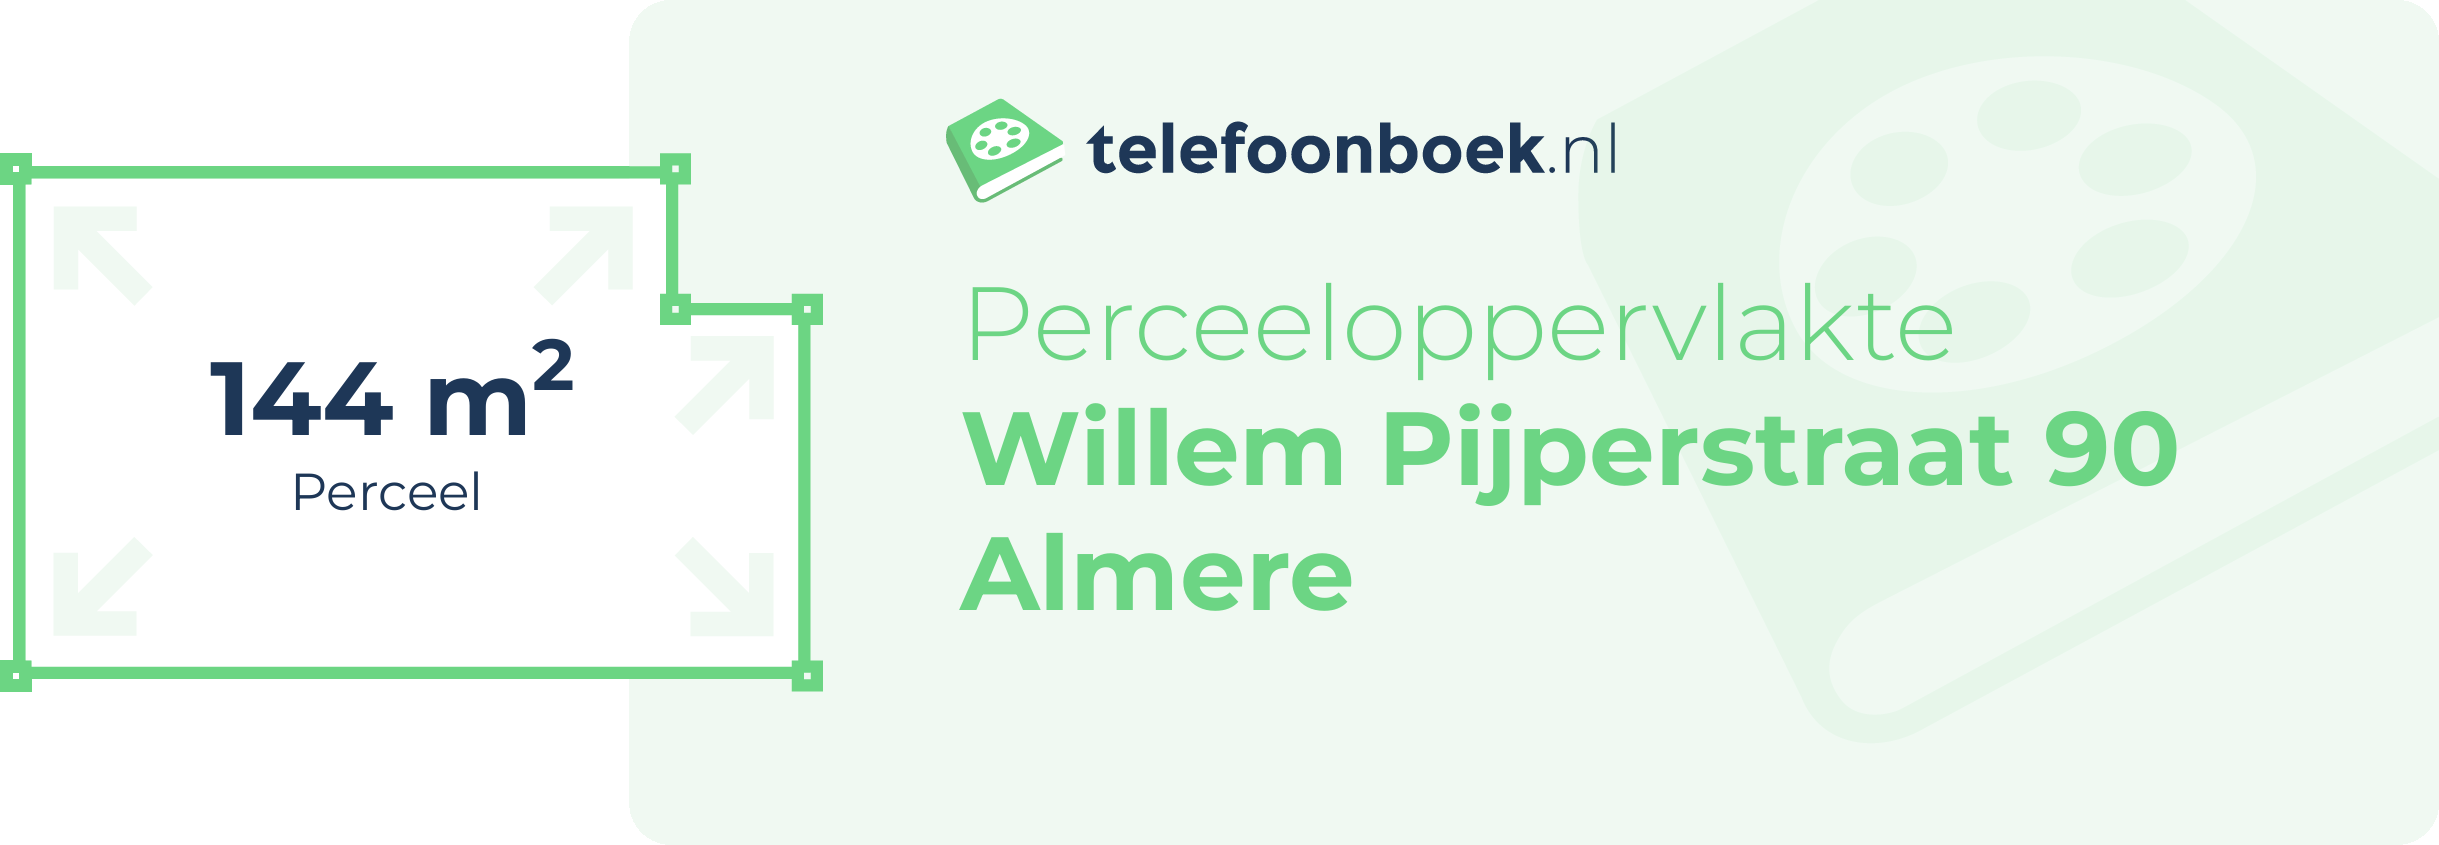 Perceeloppervlakte Willem Pijperstraat 90 Almere